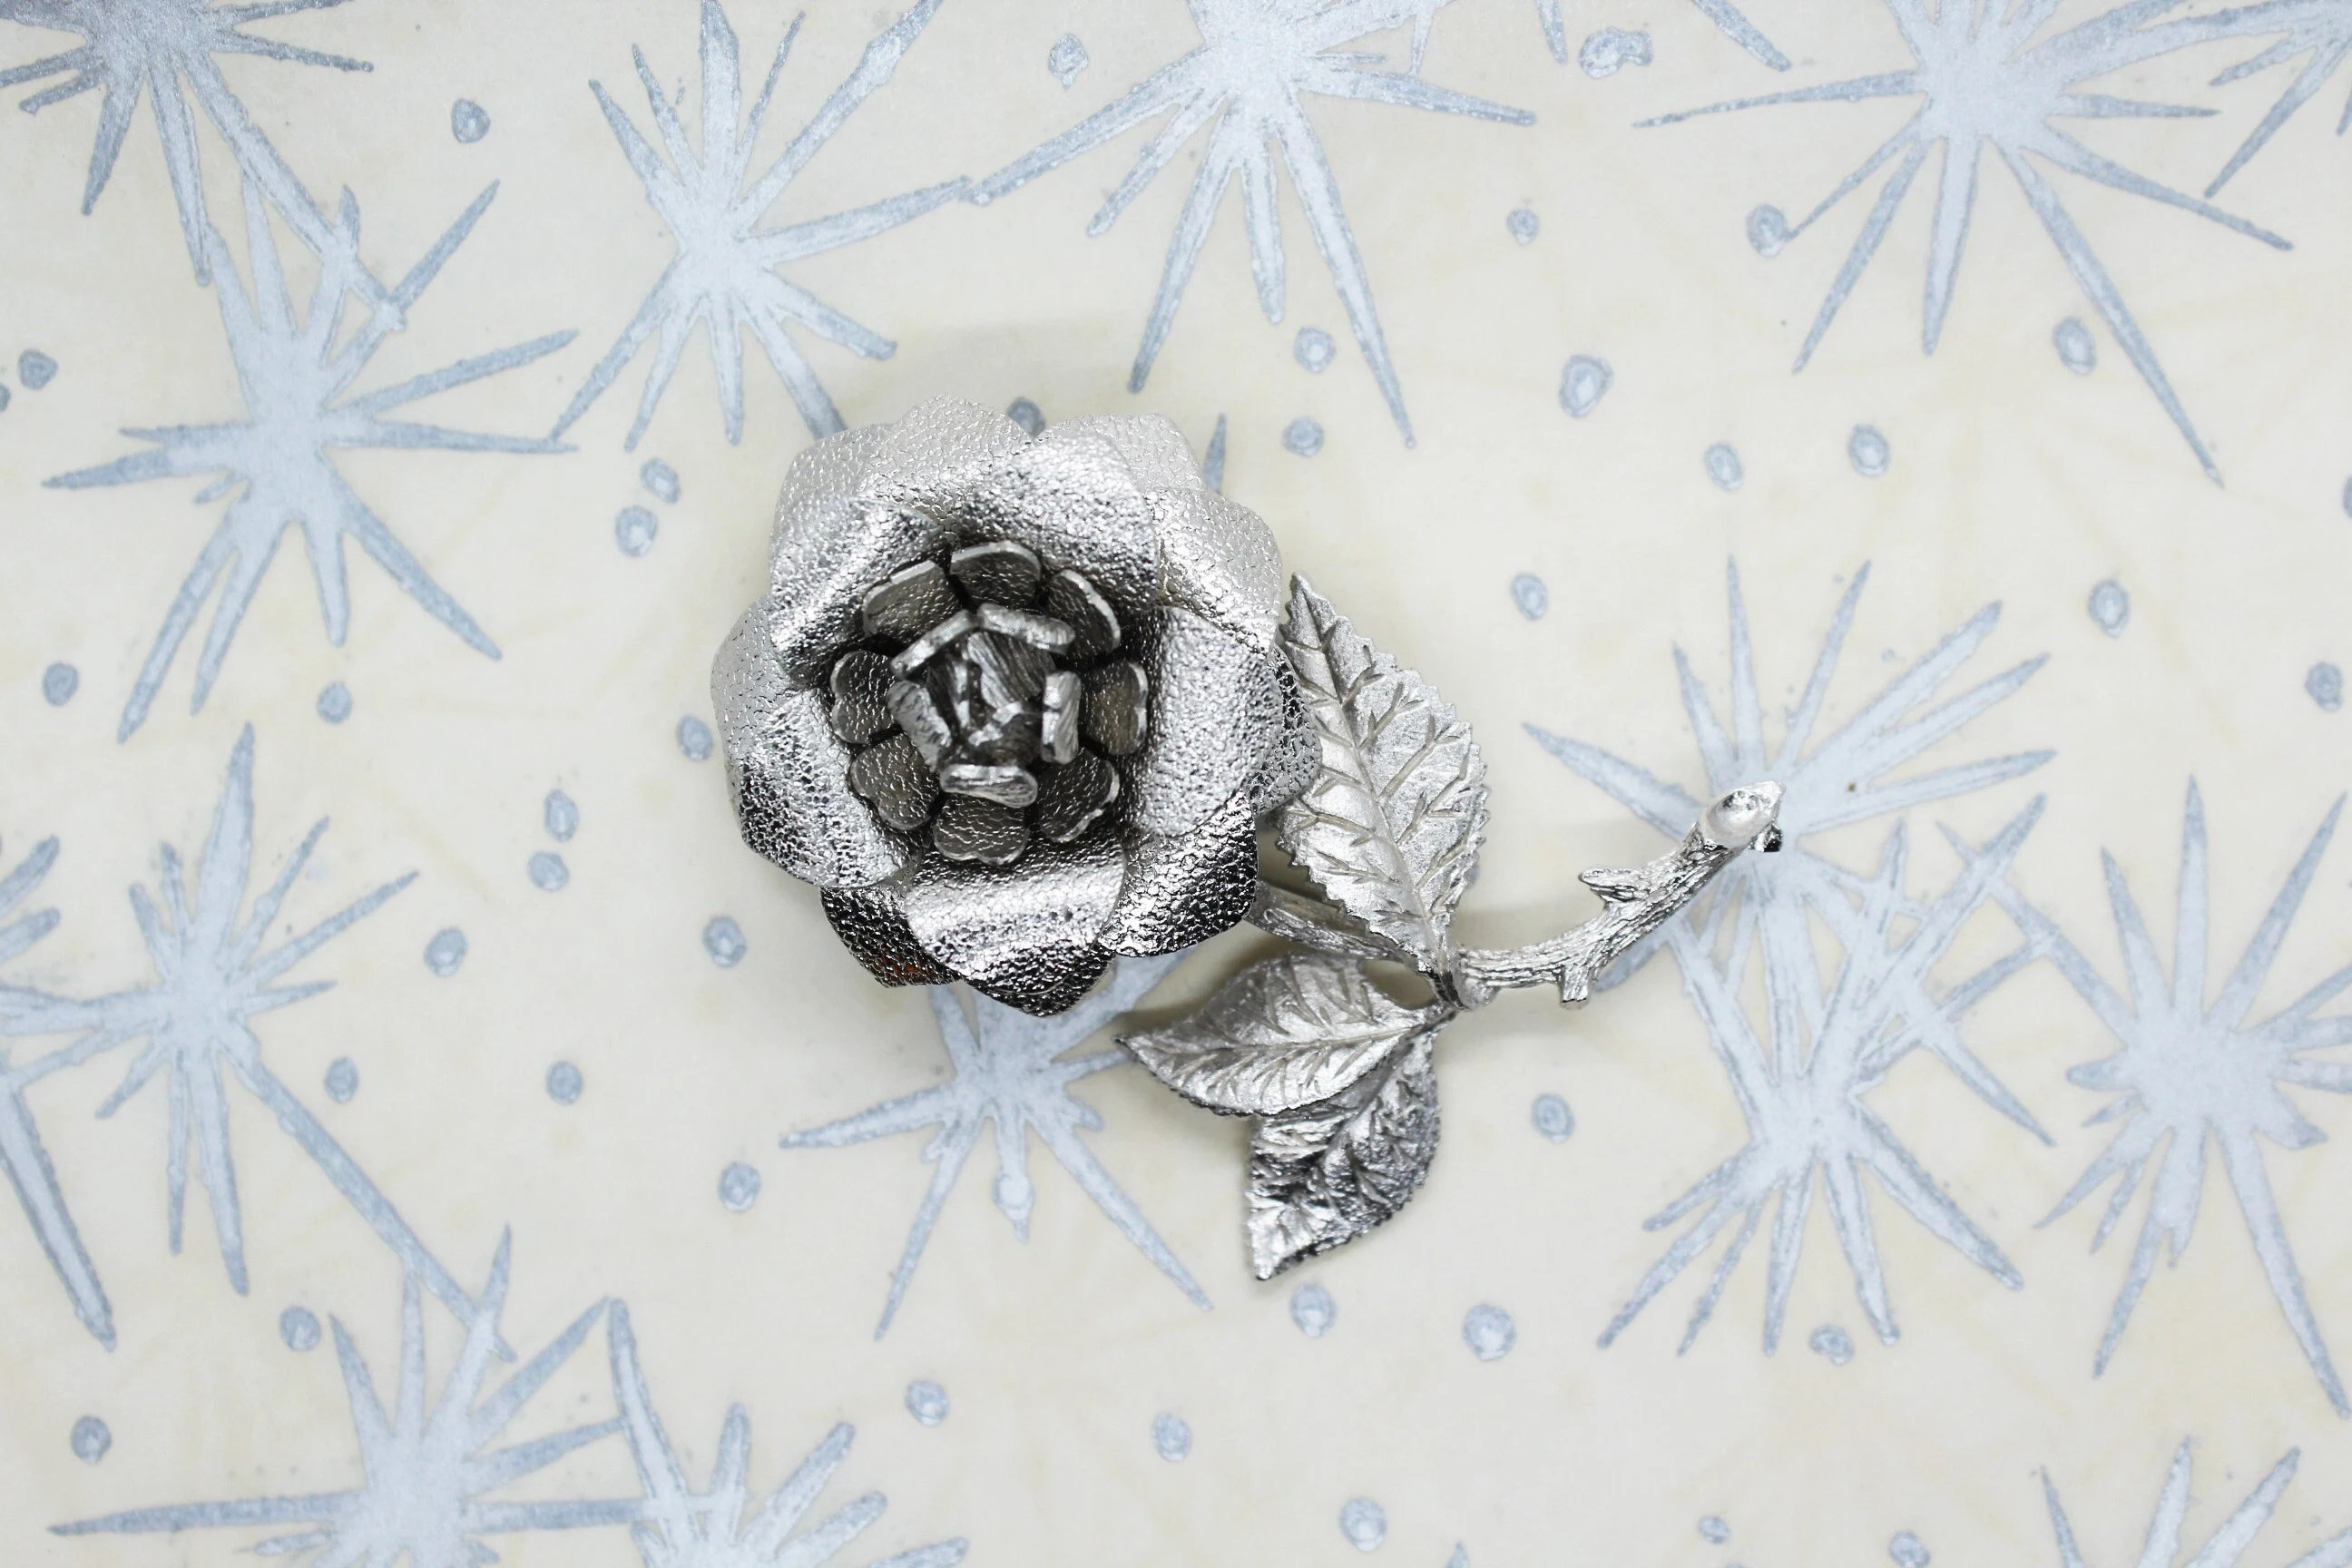 MCM Silver Tone Textured Rose Flower Brooch - Vintage, Mid Century, Retro, Statement, Large, Chunky, Bold, Feminine, Old Hollywood, Grandma